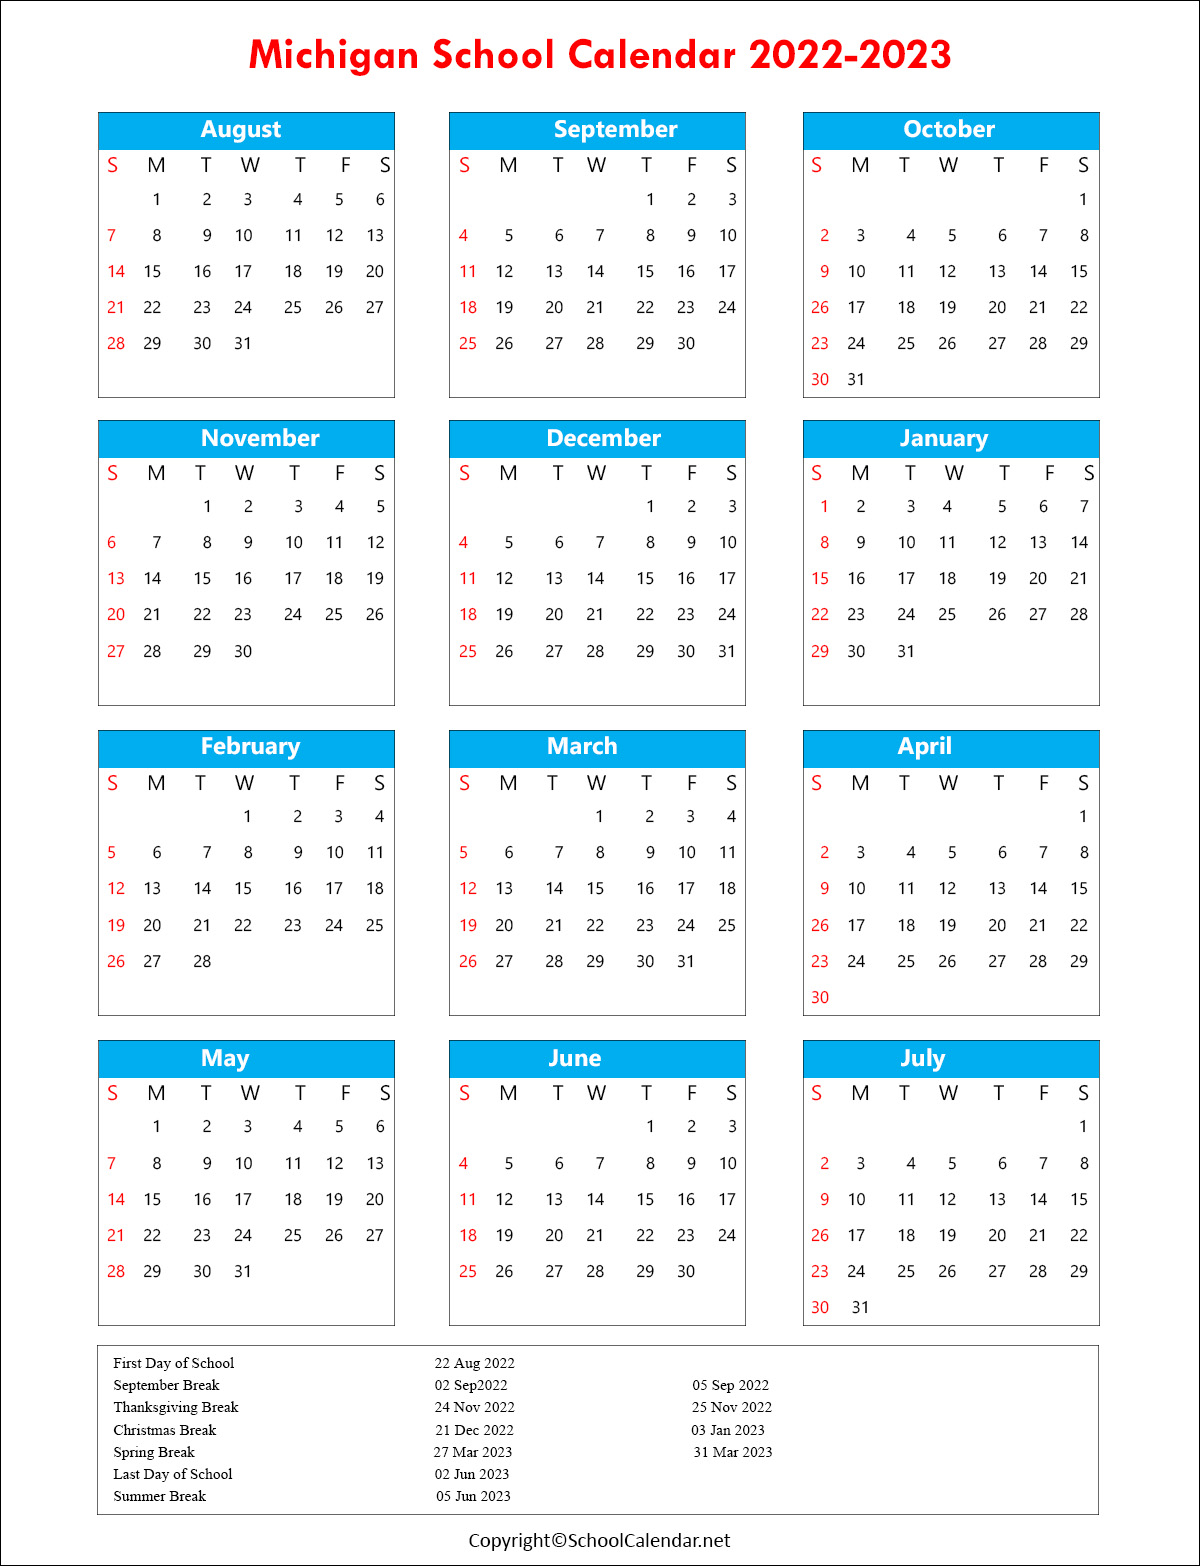 Michigan School Holiday Calendar 2022